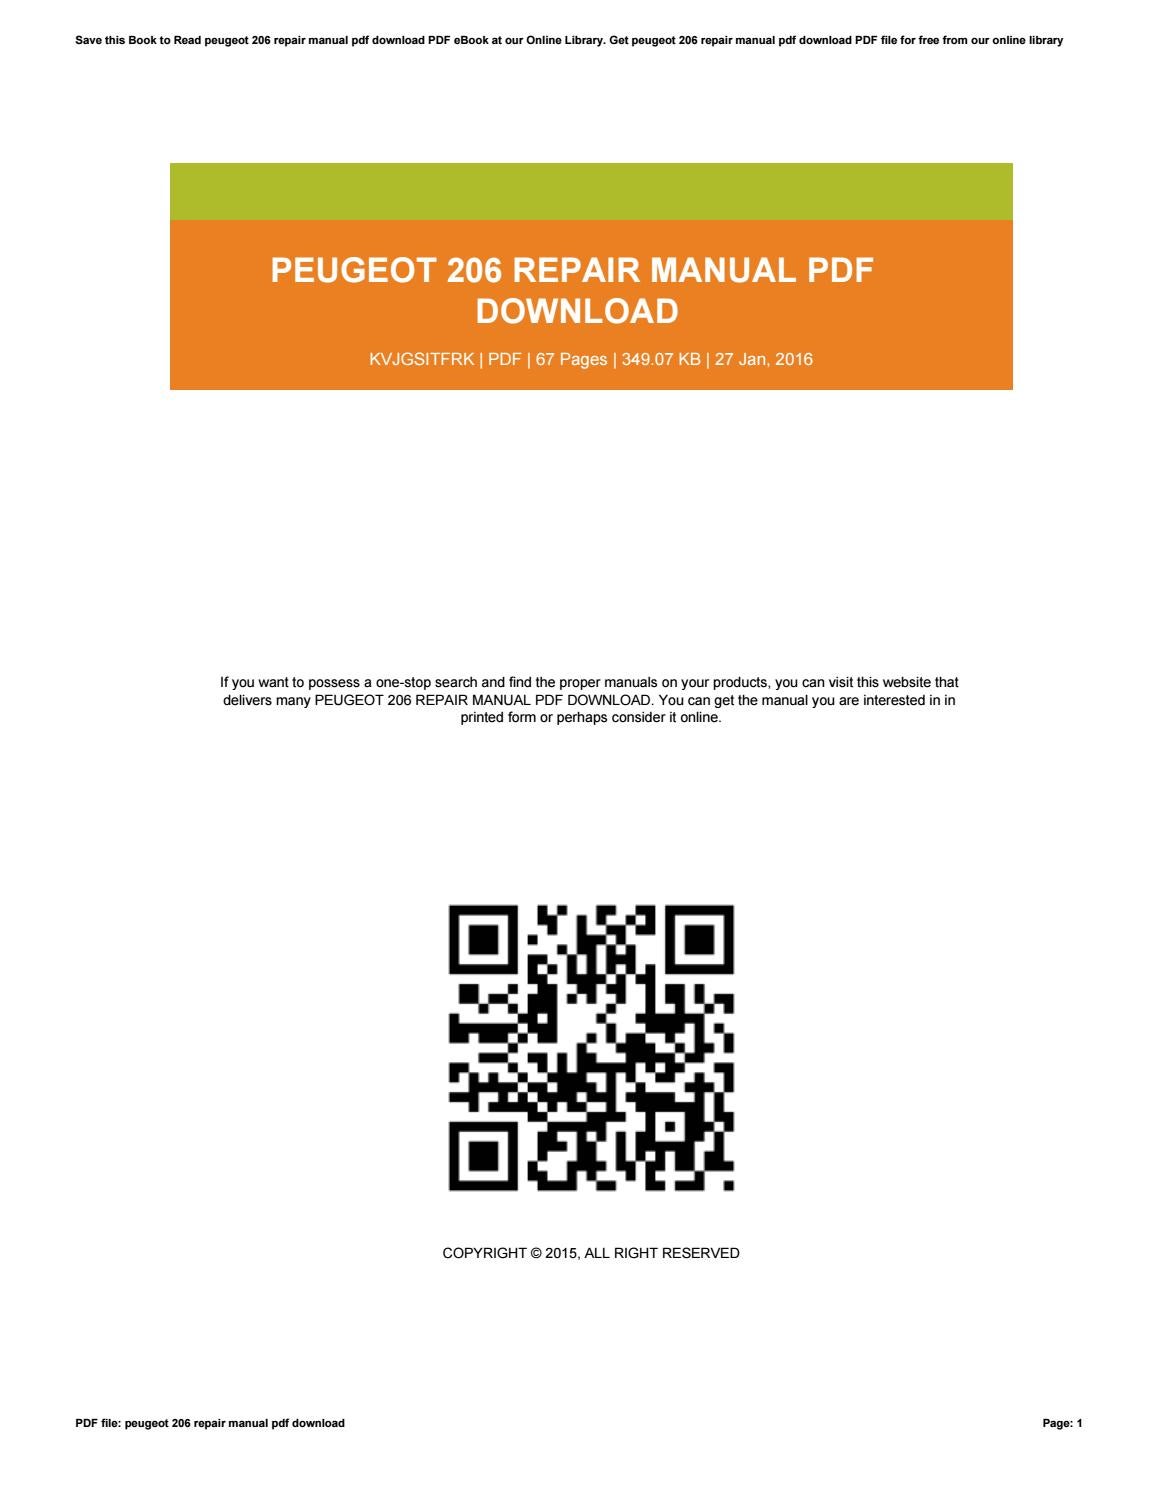 peugeot 206 manual pdf free download